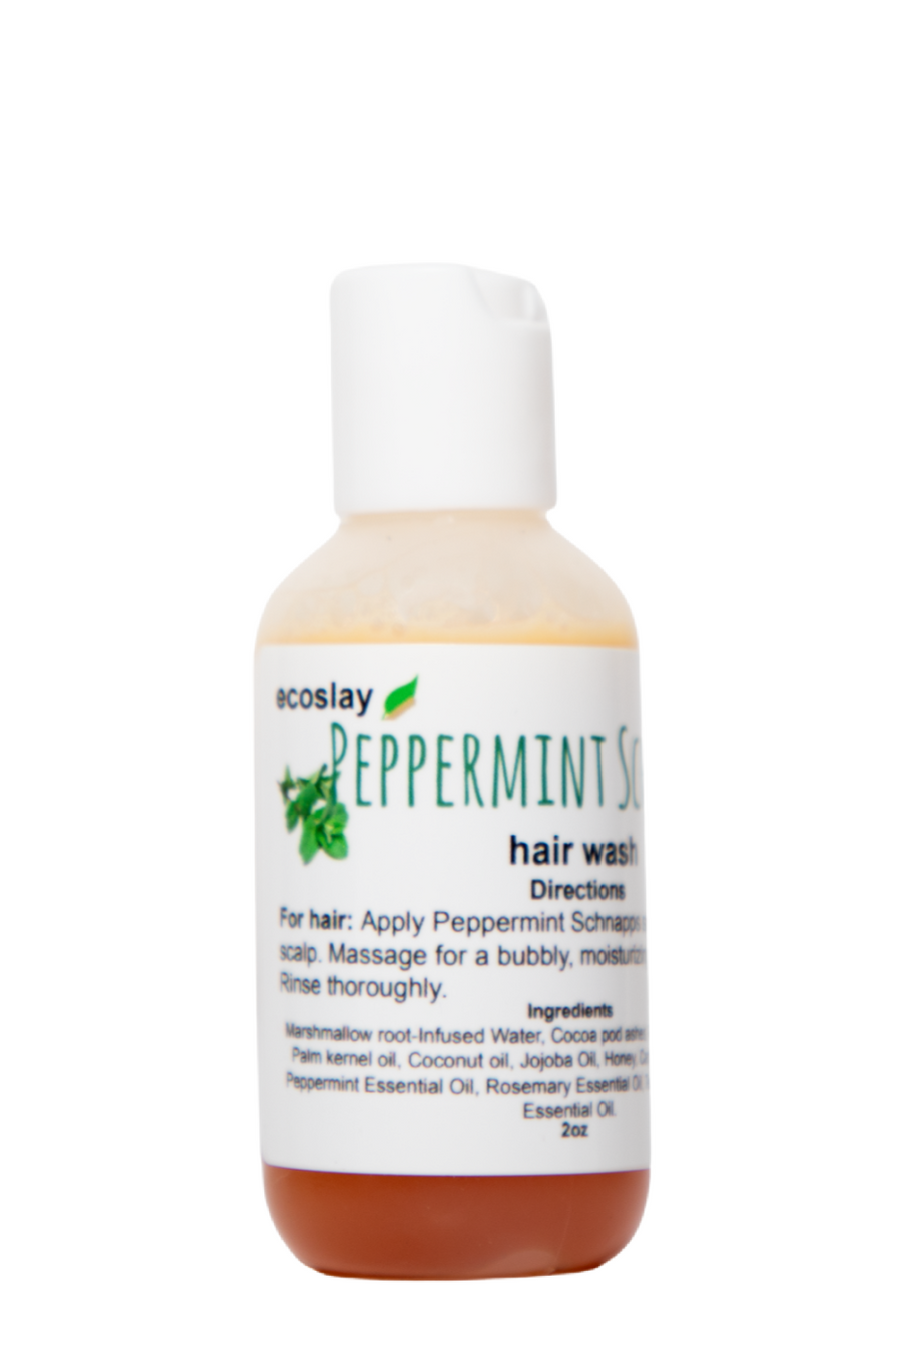 Peppermint Schnapps Hair Cleanser